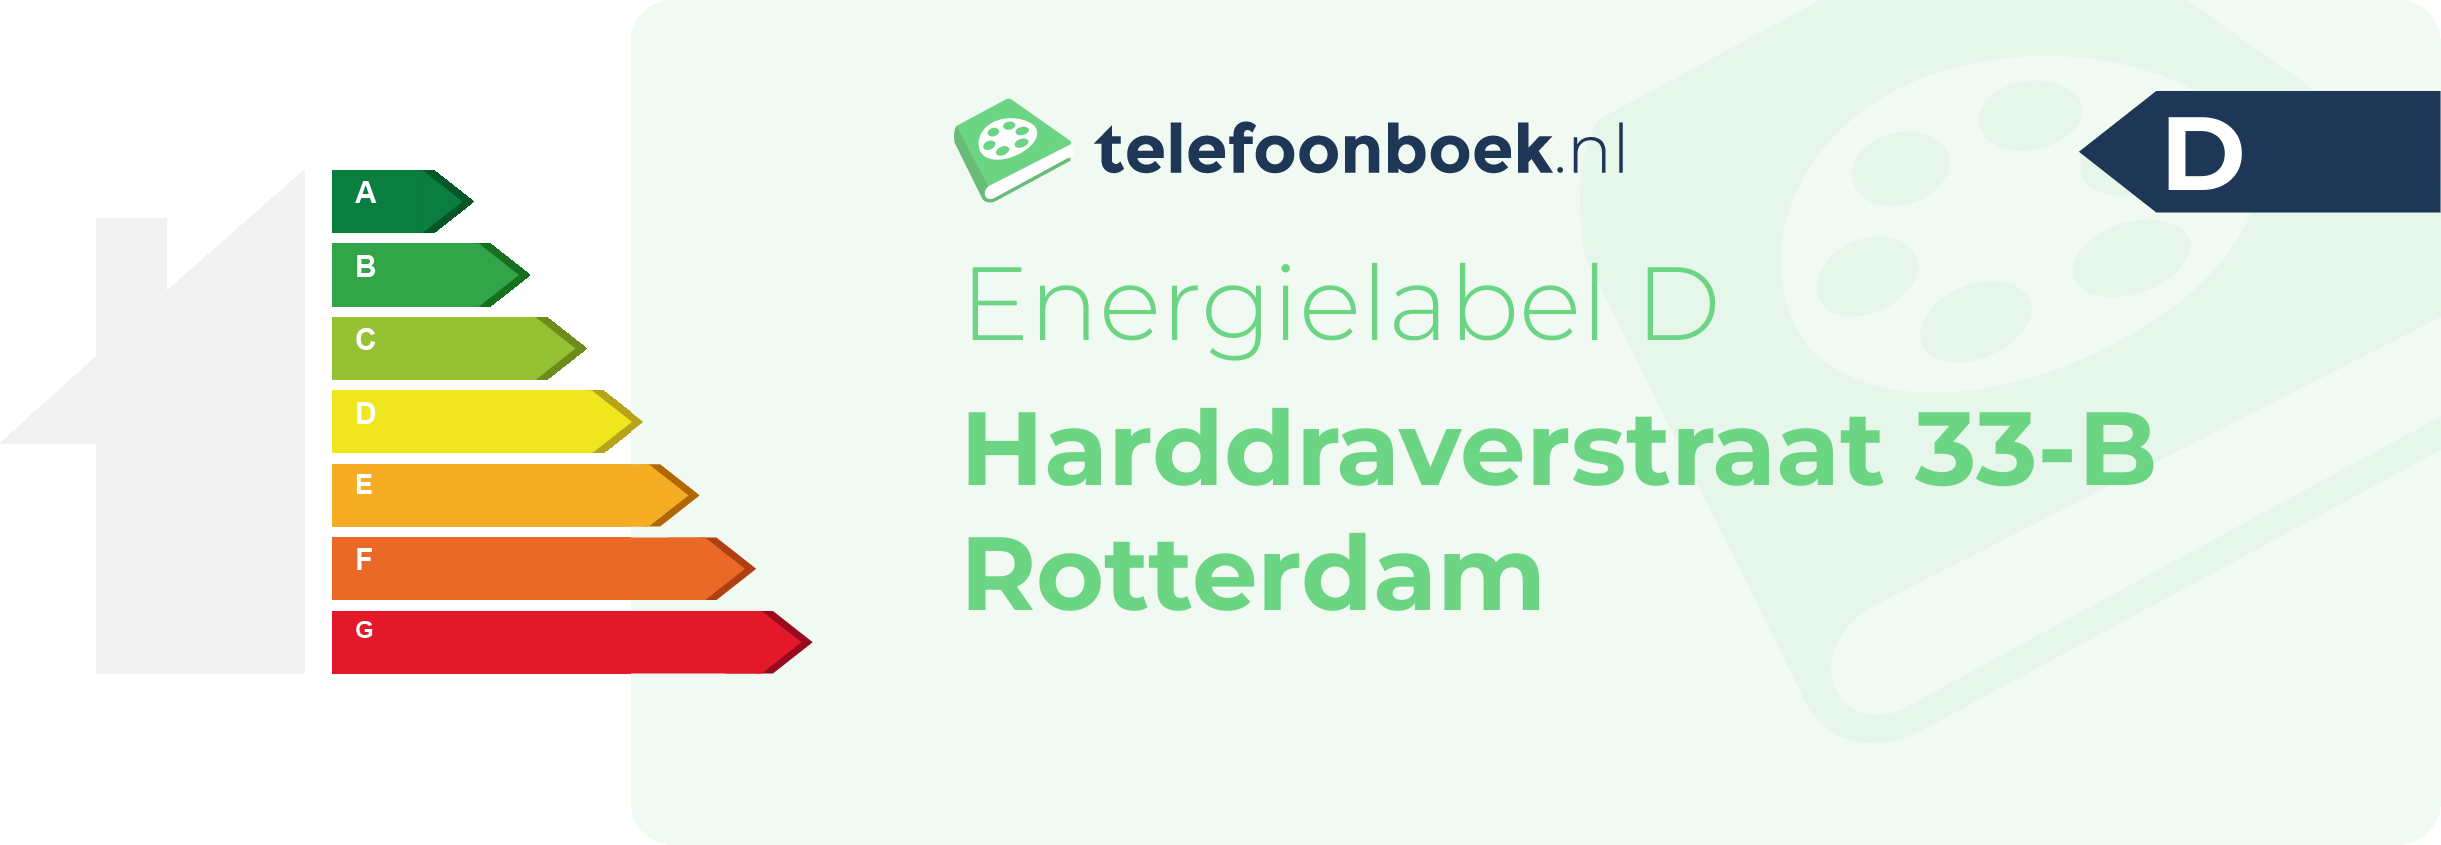 Energielabel Harddraverstraat 33-B Rotterdam